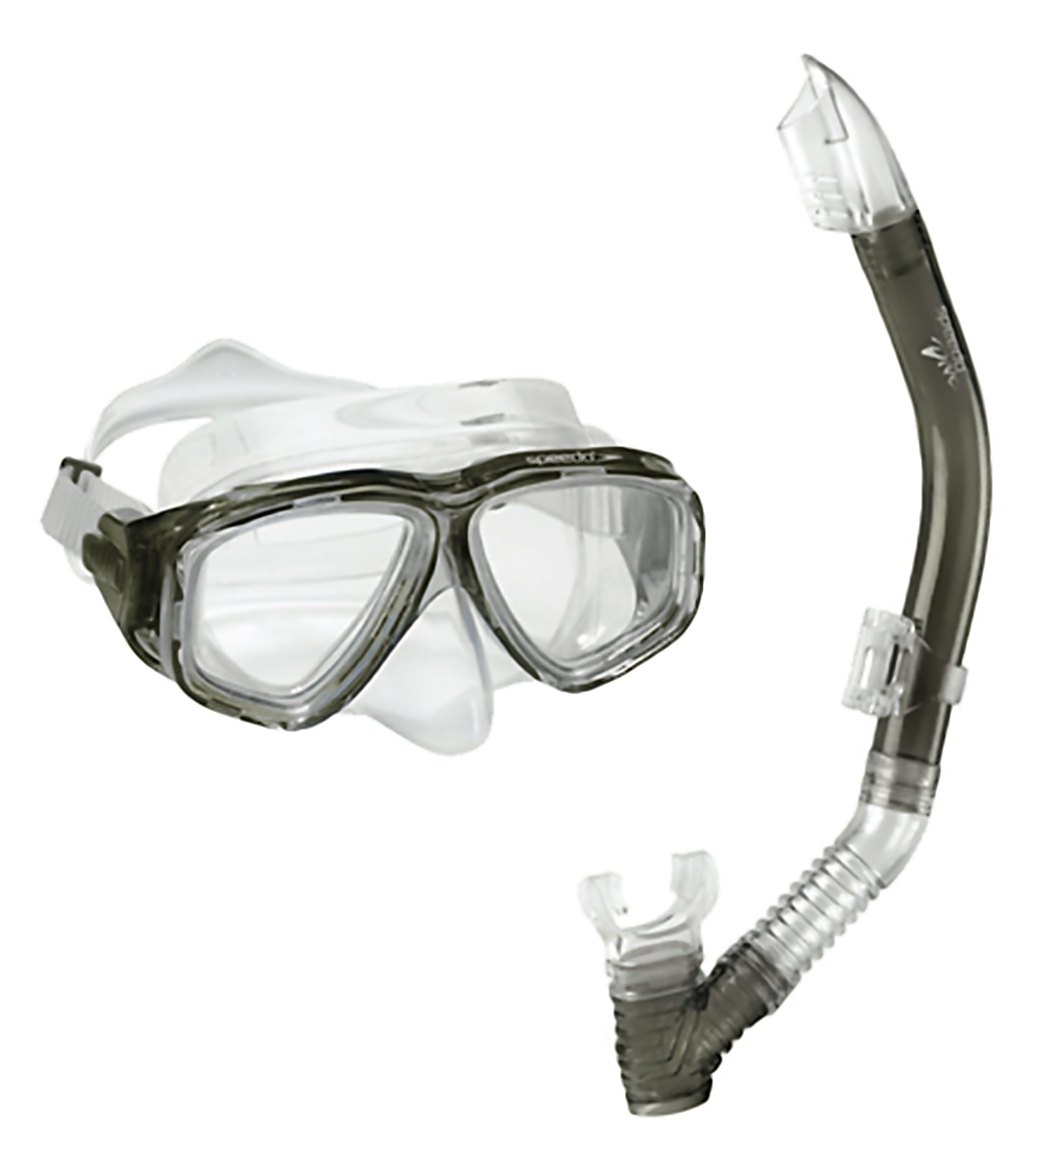 Speedo Adult Adventure Mask Set - Smoke - Swimoutlet.com